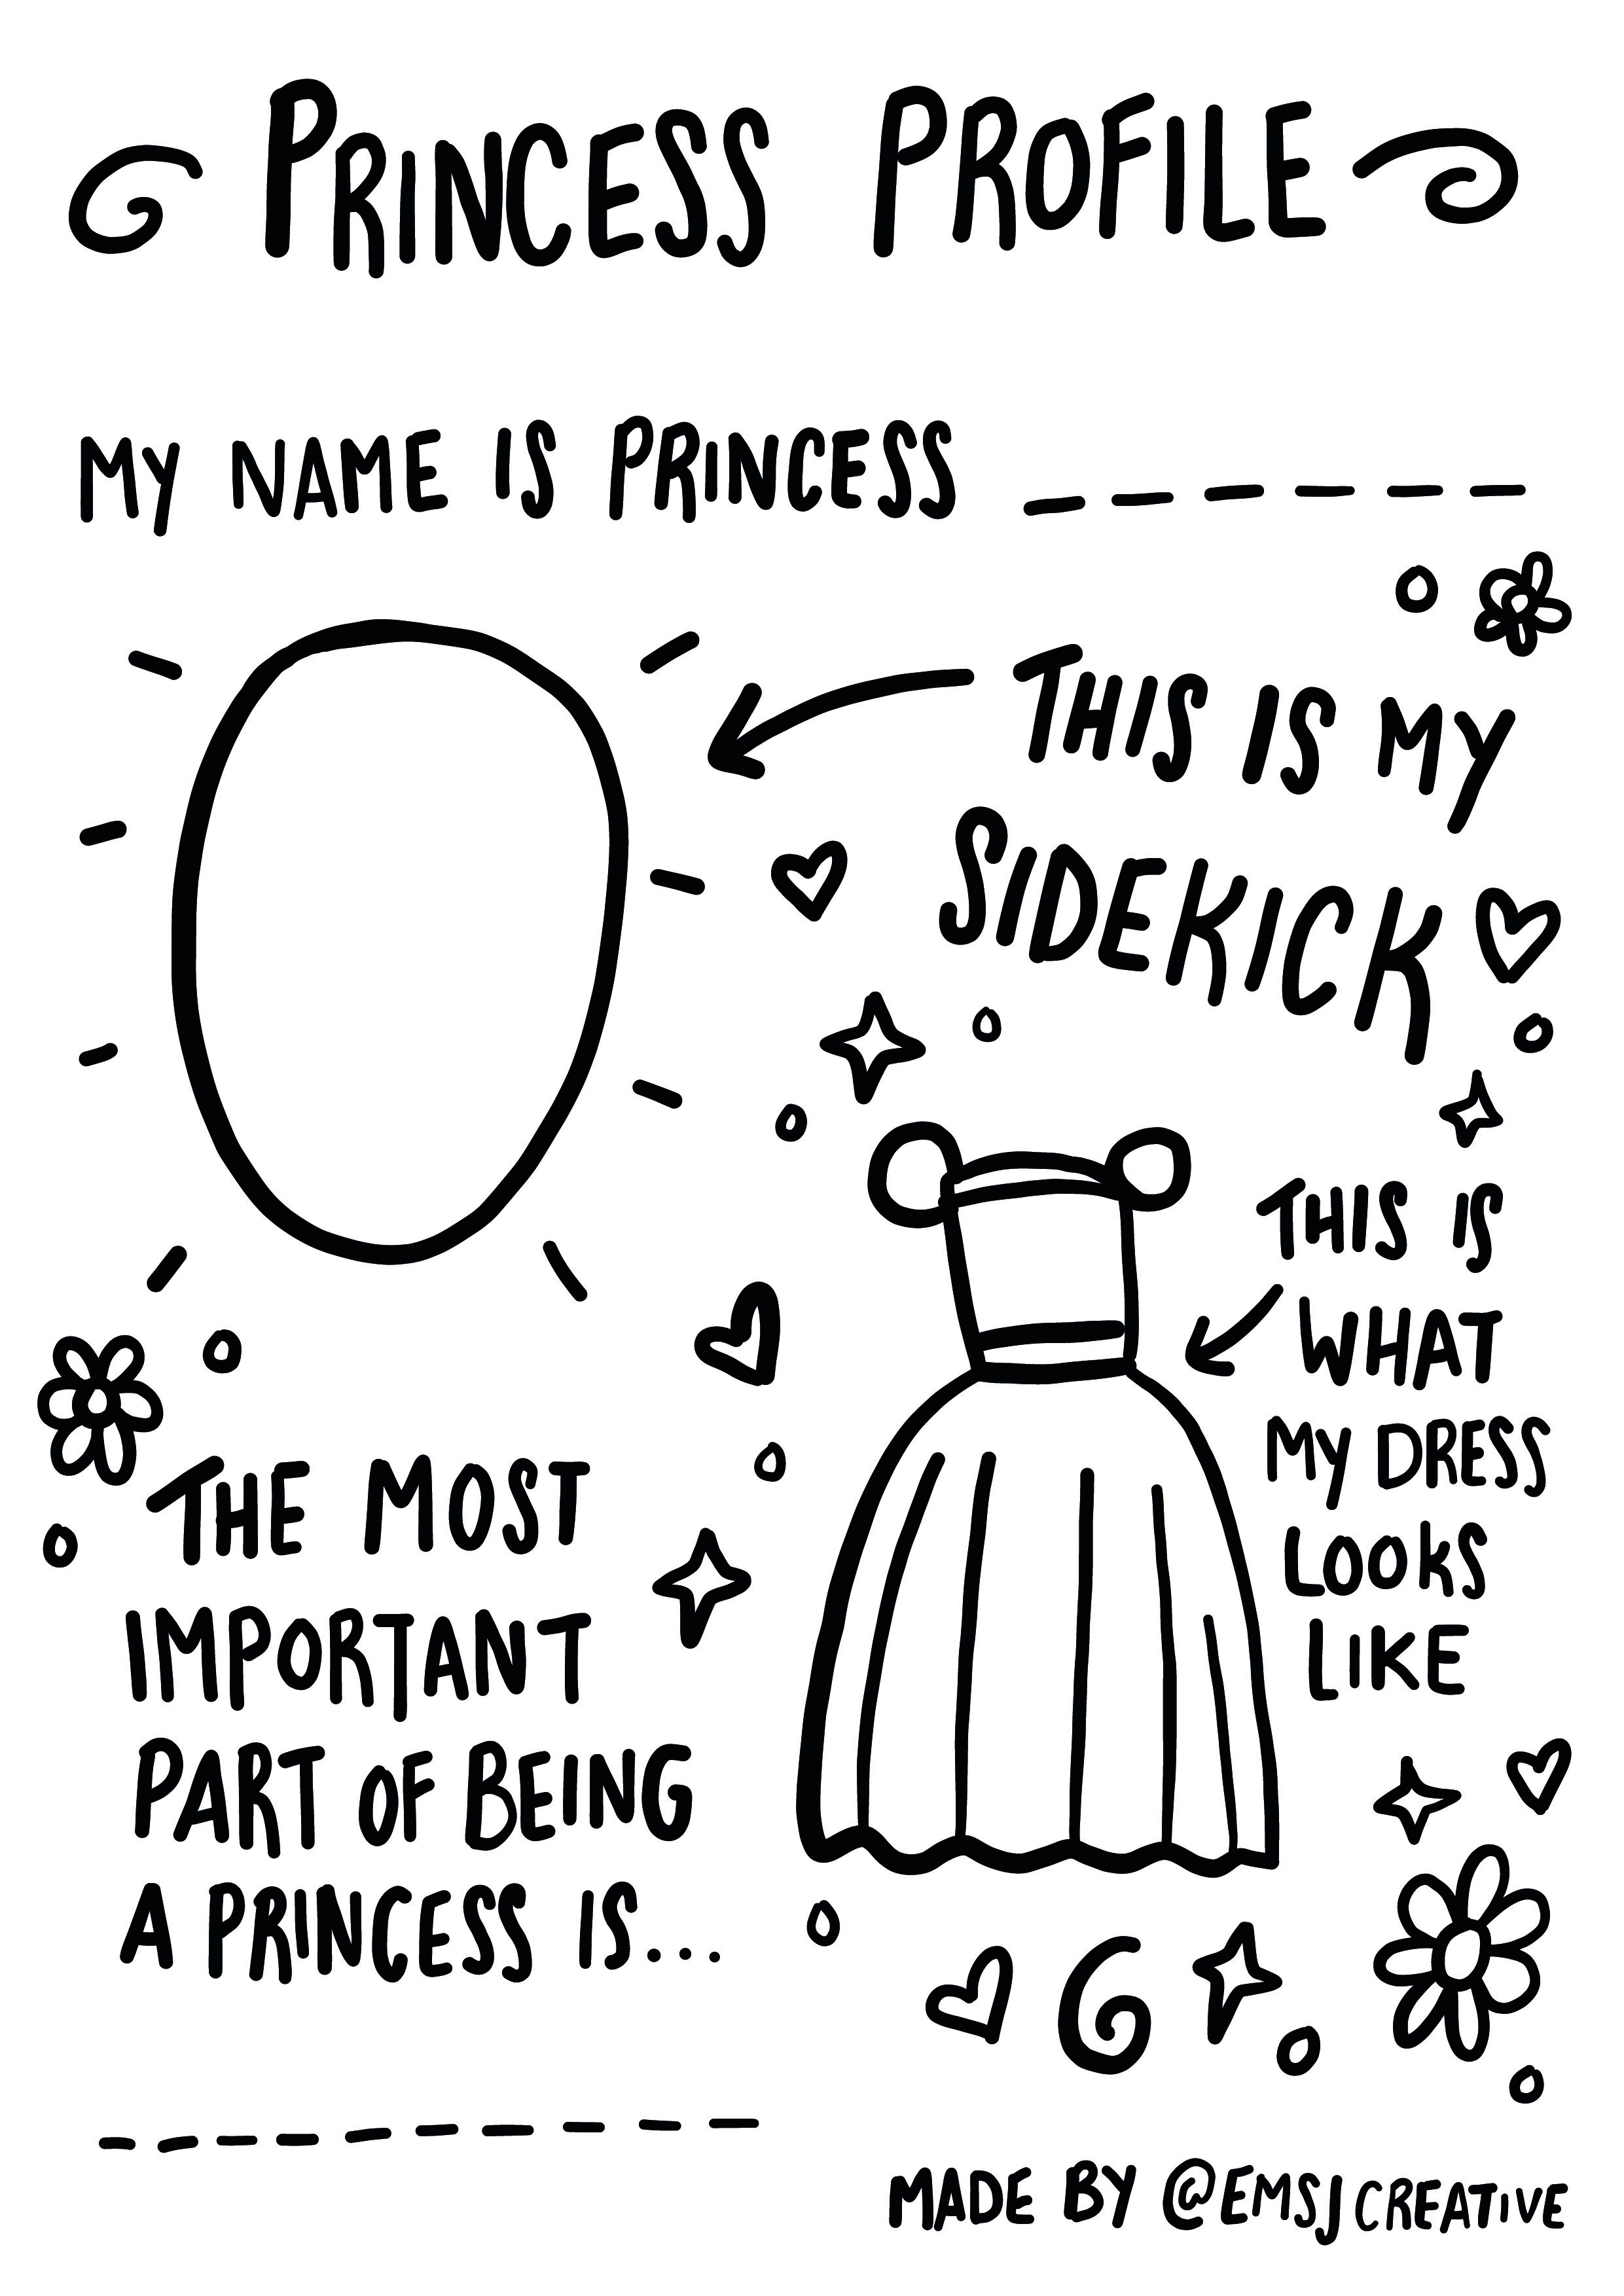 Princess Profile